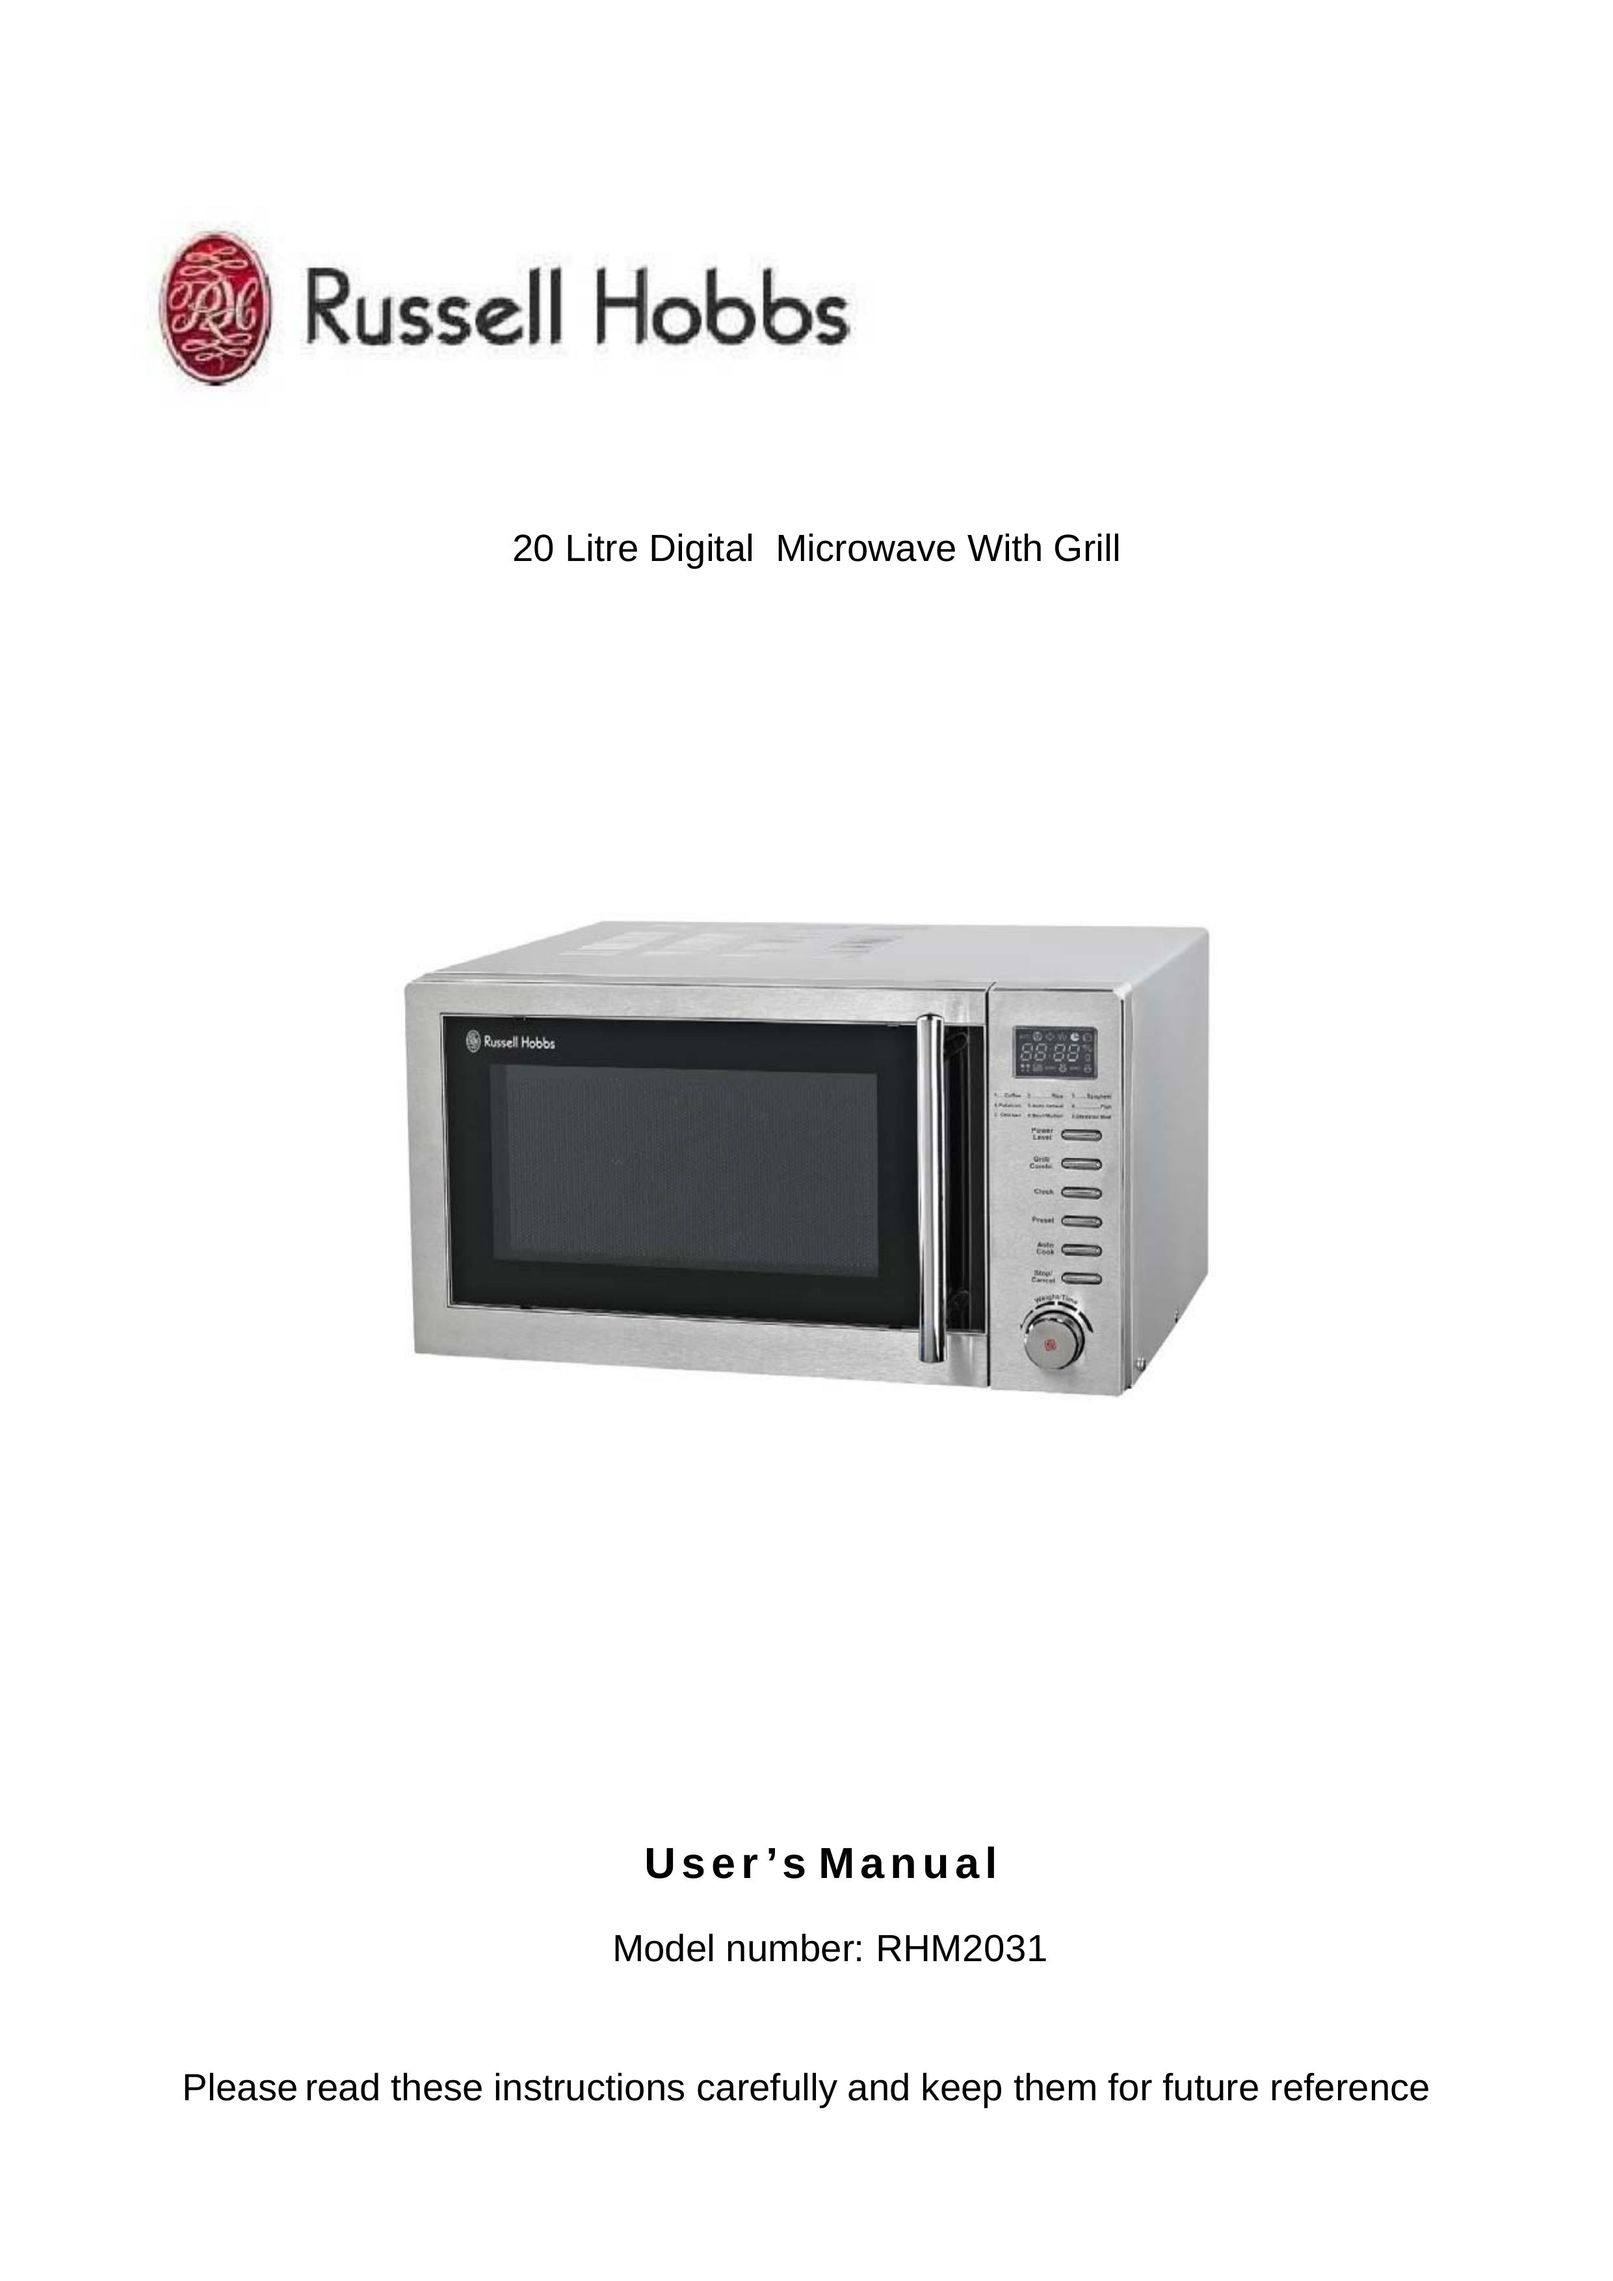 Russell Hobbs RHM2031 Microwave Oven User Manual